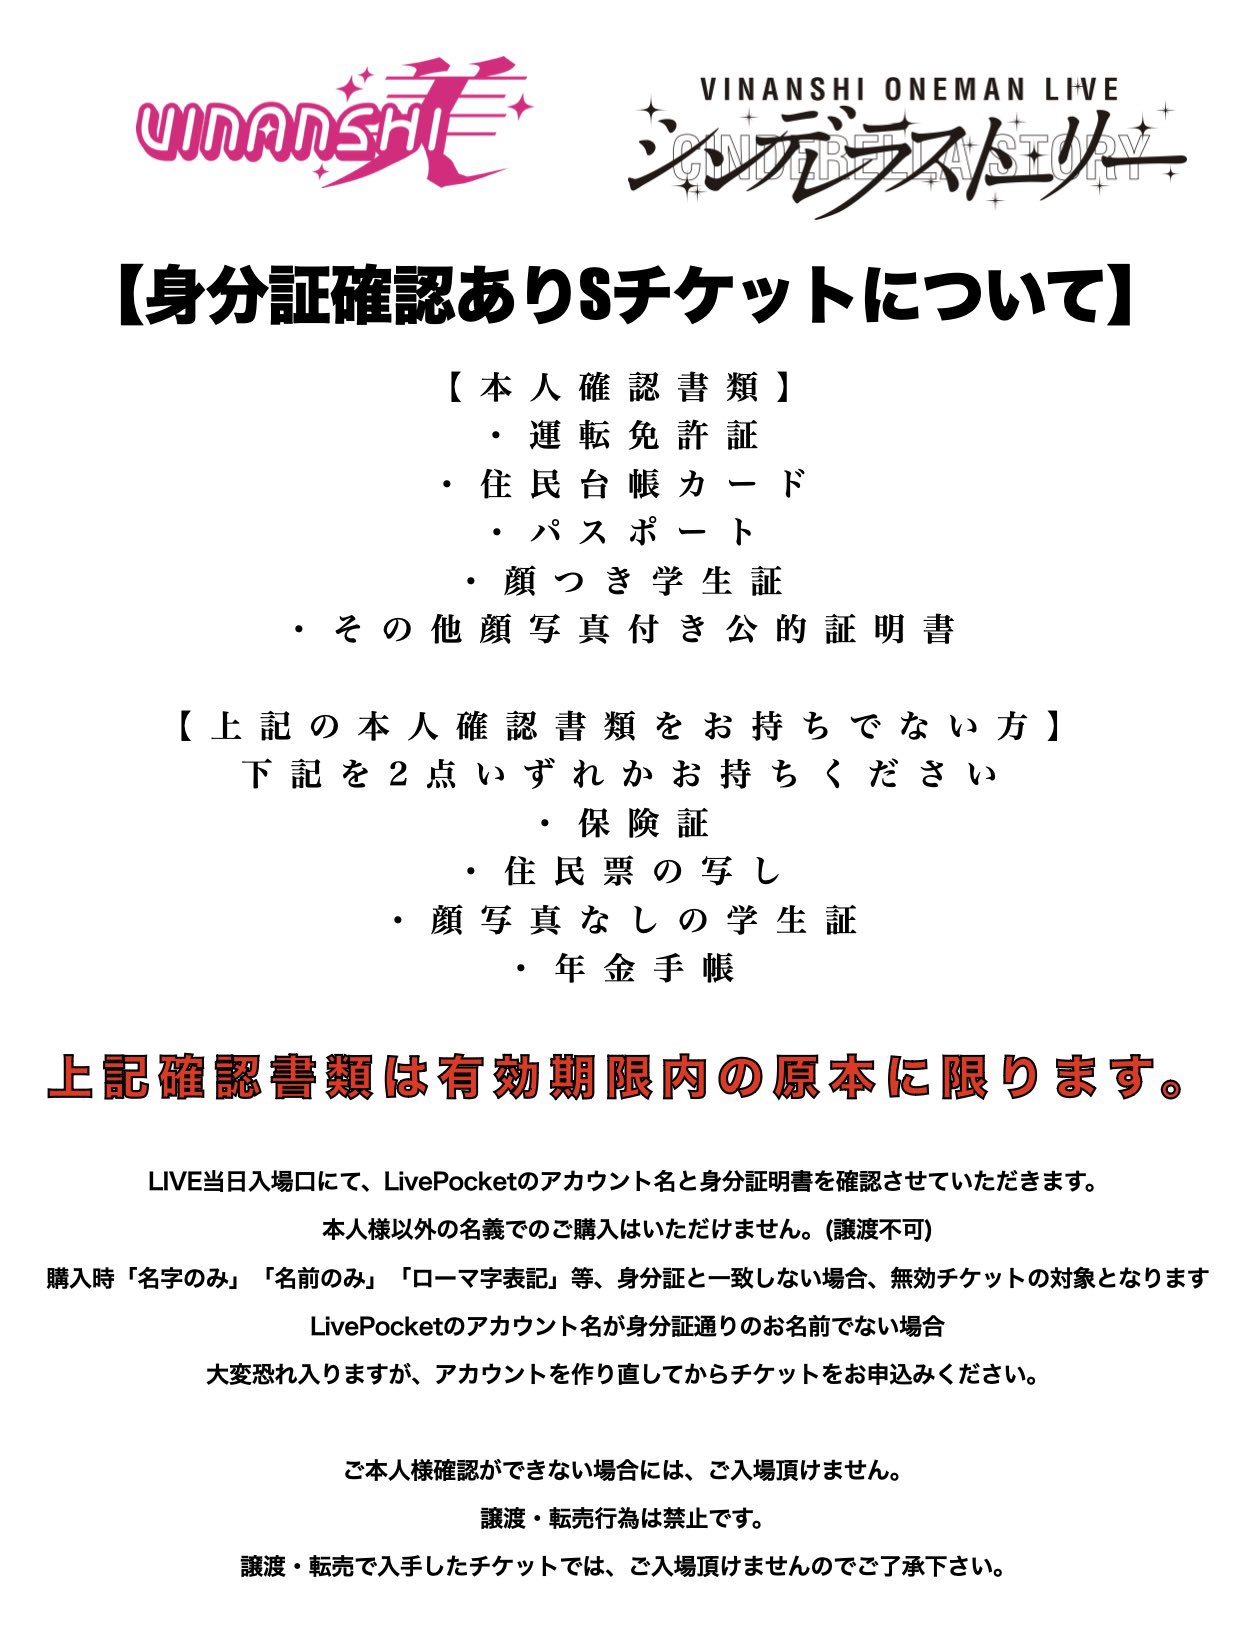 VINANSHI 4th ONEMAN 『シンデレラストーリー』のチケット情報・予約